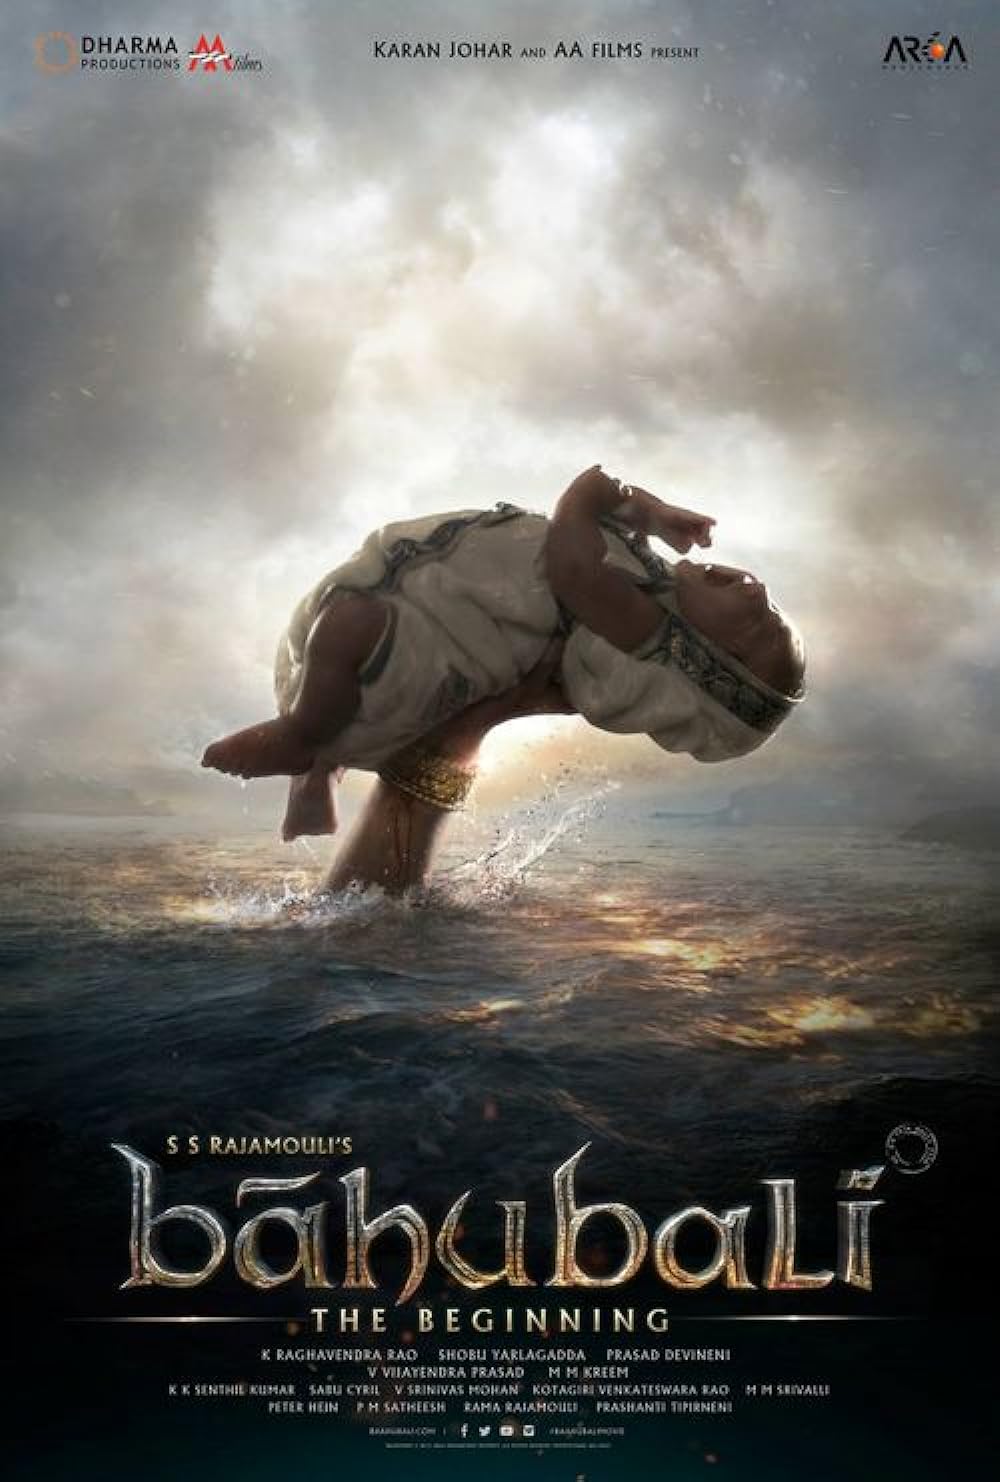 brendan swope add bahubali 2 movie download in hindi photo